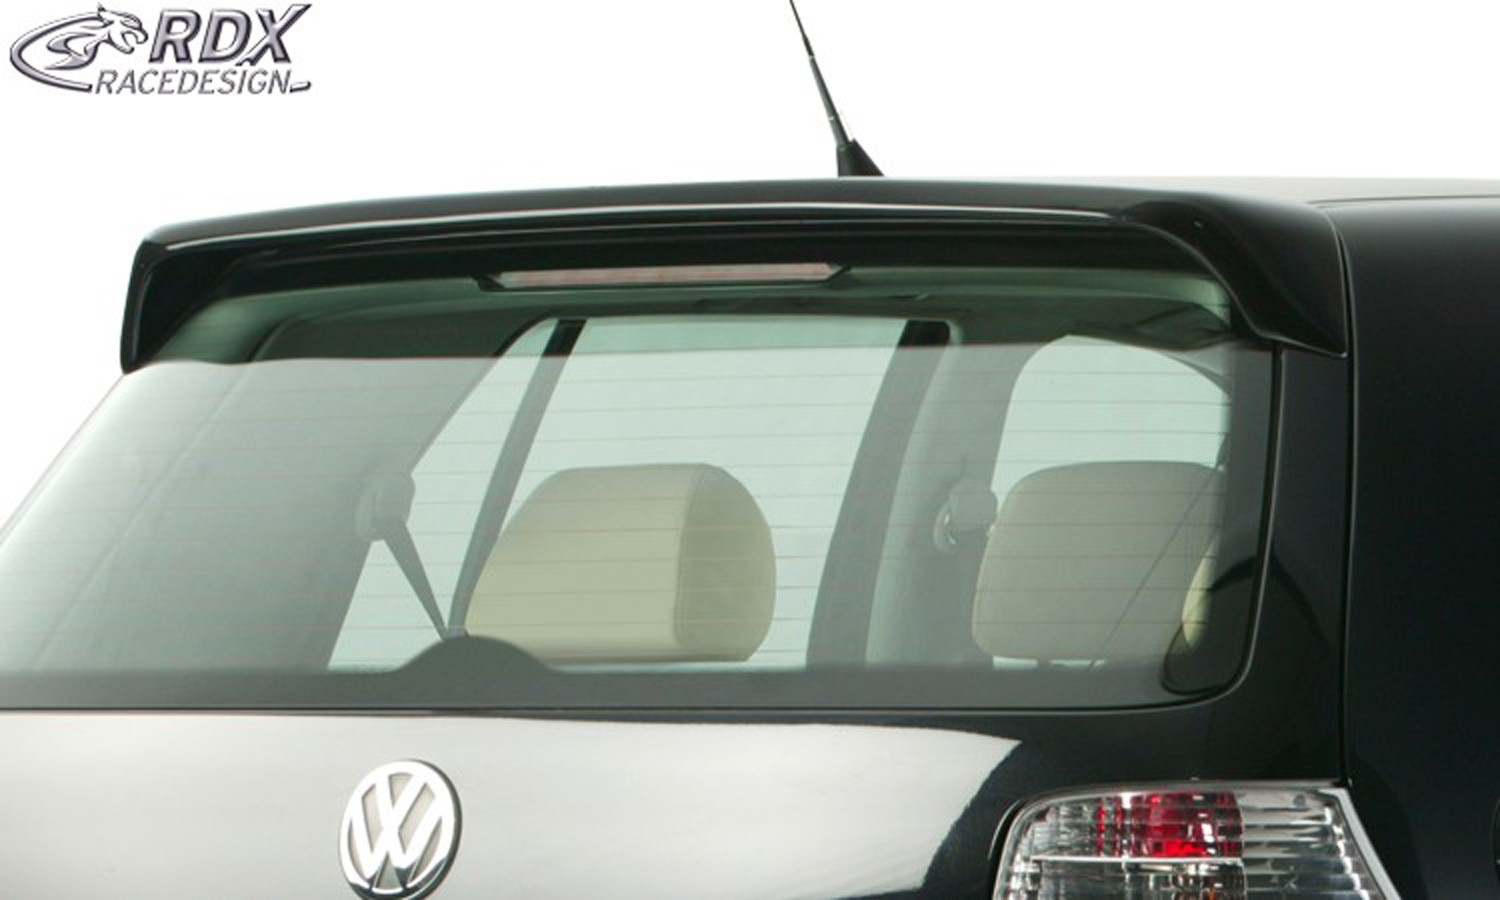 Dachspoiler VW Golf 4 (grosse Version) (PU-HS)